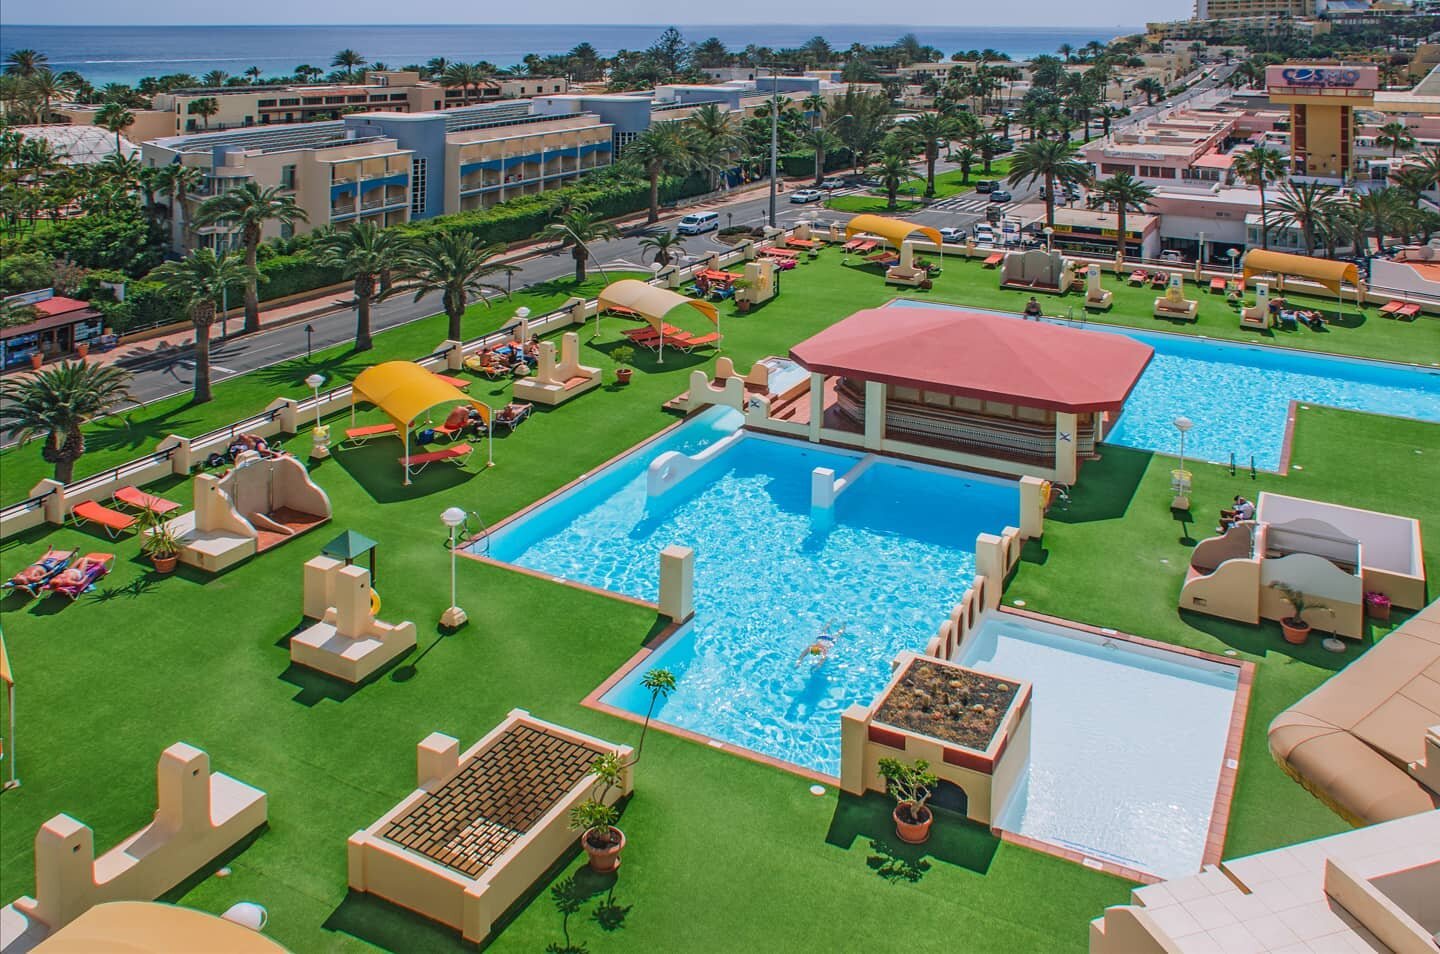 This is the Residence Palm Garden in Jandia. You can rest by the swimming pool, sunbathe and swim!
Esta es la residencia Palm Garden en Jandia. &iexcl;Puedes descansar en la piscina, tomar el sol y nadar!
#Twentyfirstliving
.
.
Get in Touch now 📩
#f